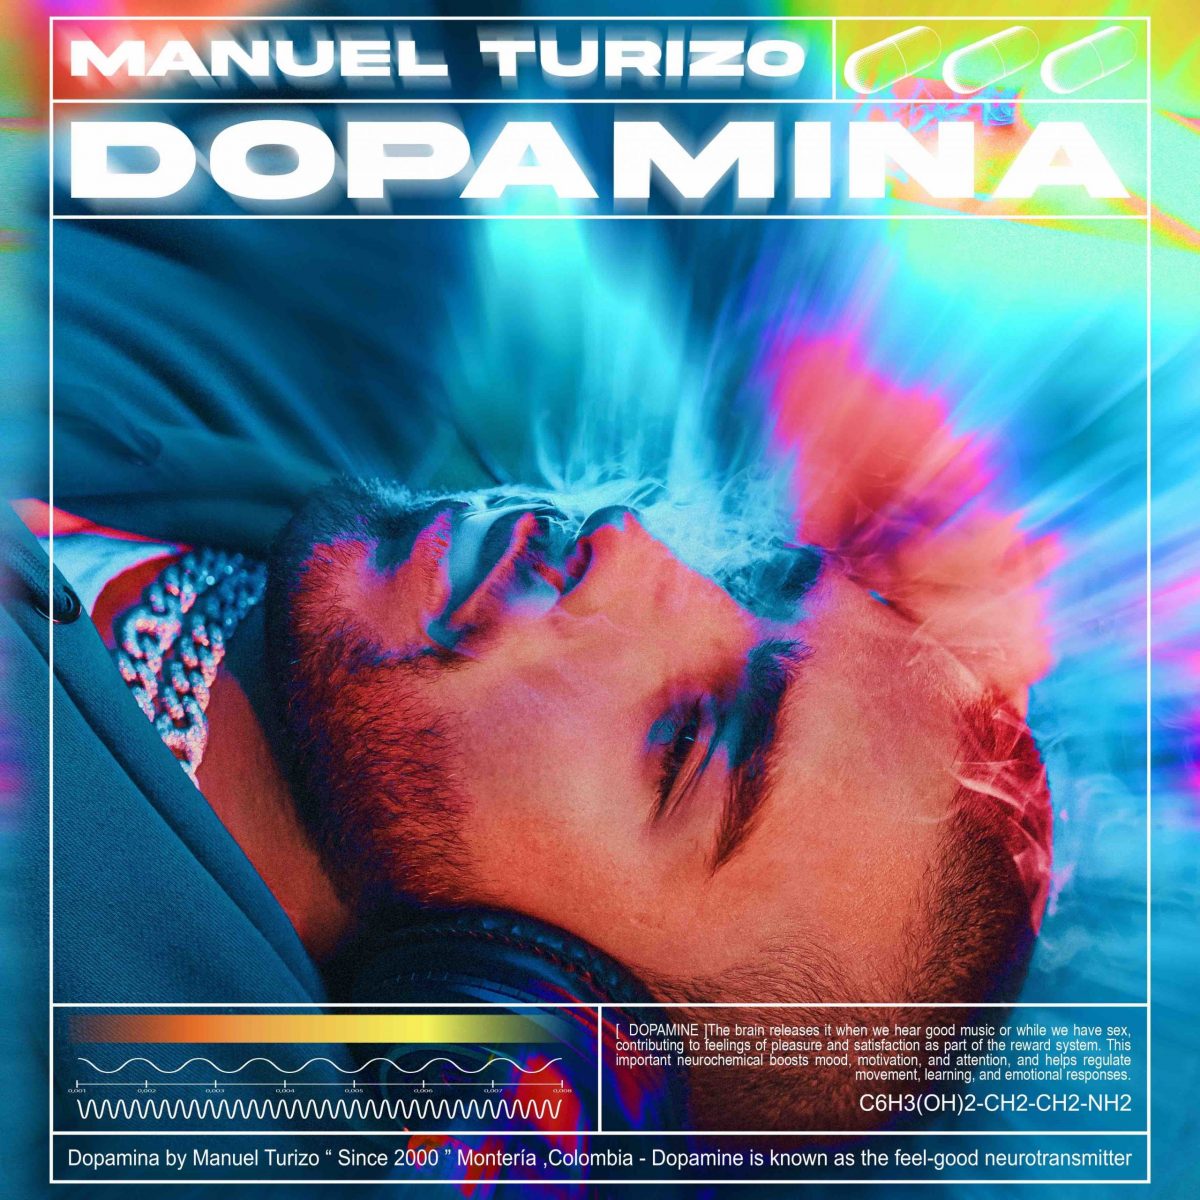 MANUEL TURIZO publica su segundo álbum de estudio «DOPAMINA»